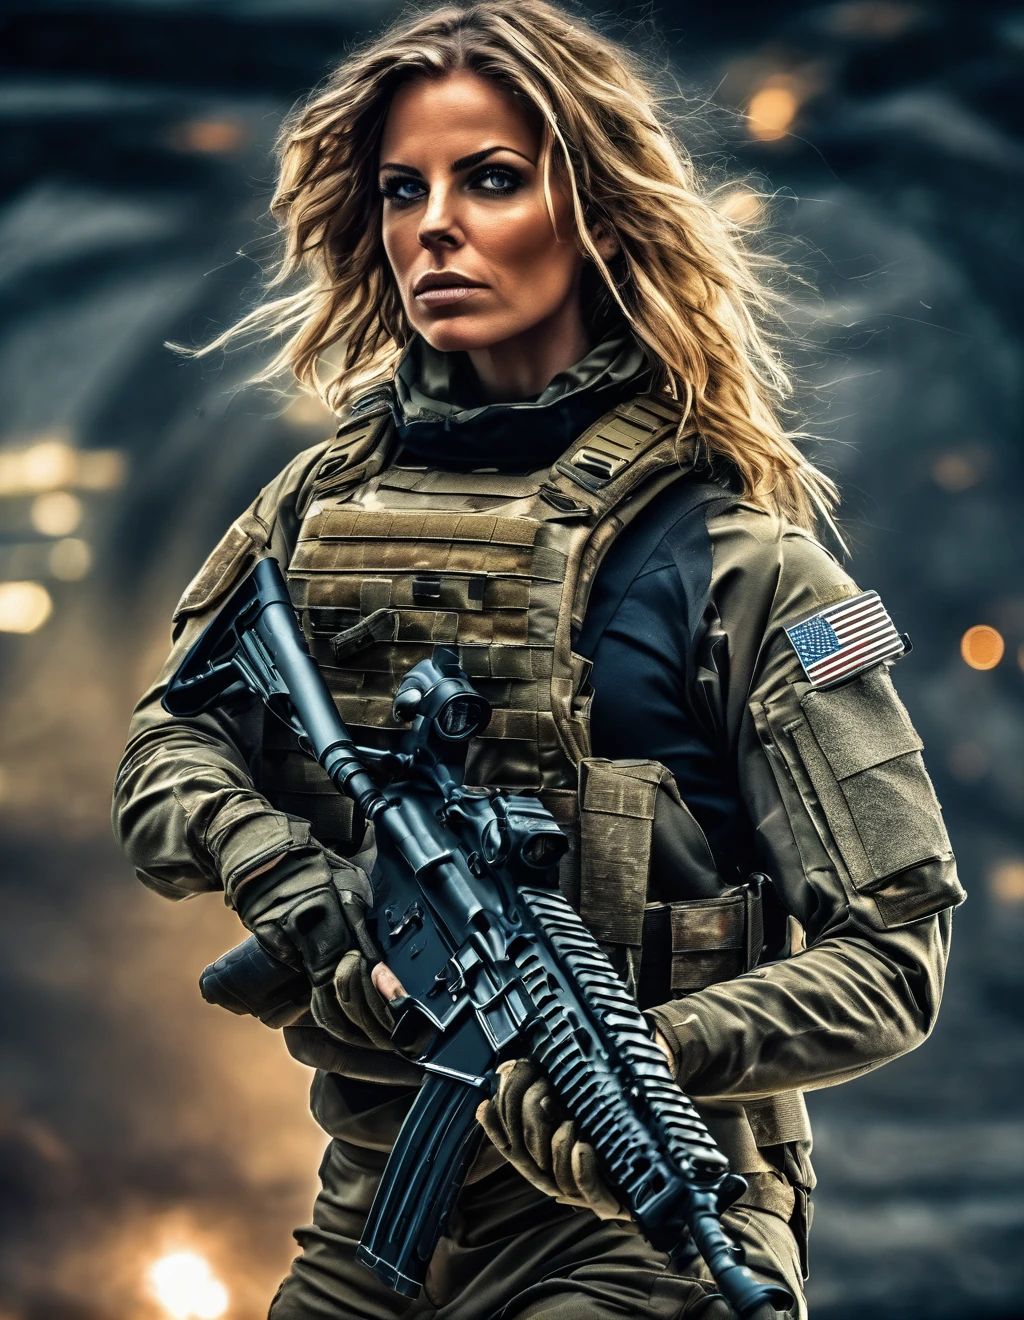 a (altura toda:1.3) pintura digital de (ahwx woman:1.1) as a female special operations soldier, ahwx, Medium length hair, estilizado em grande, Ondas Volumosas., cinematic lighting, epic, inspirador, hdr,